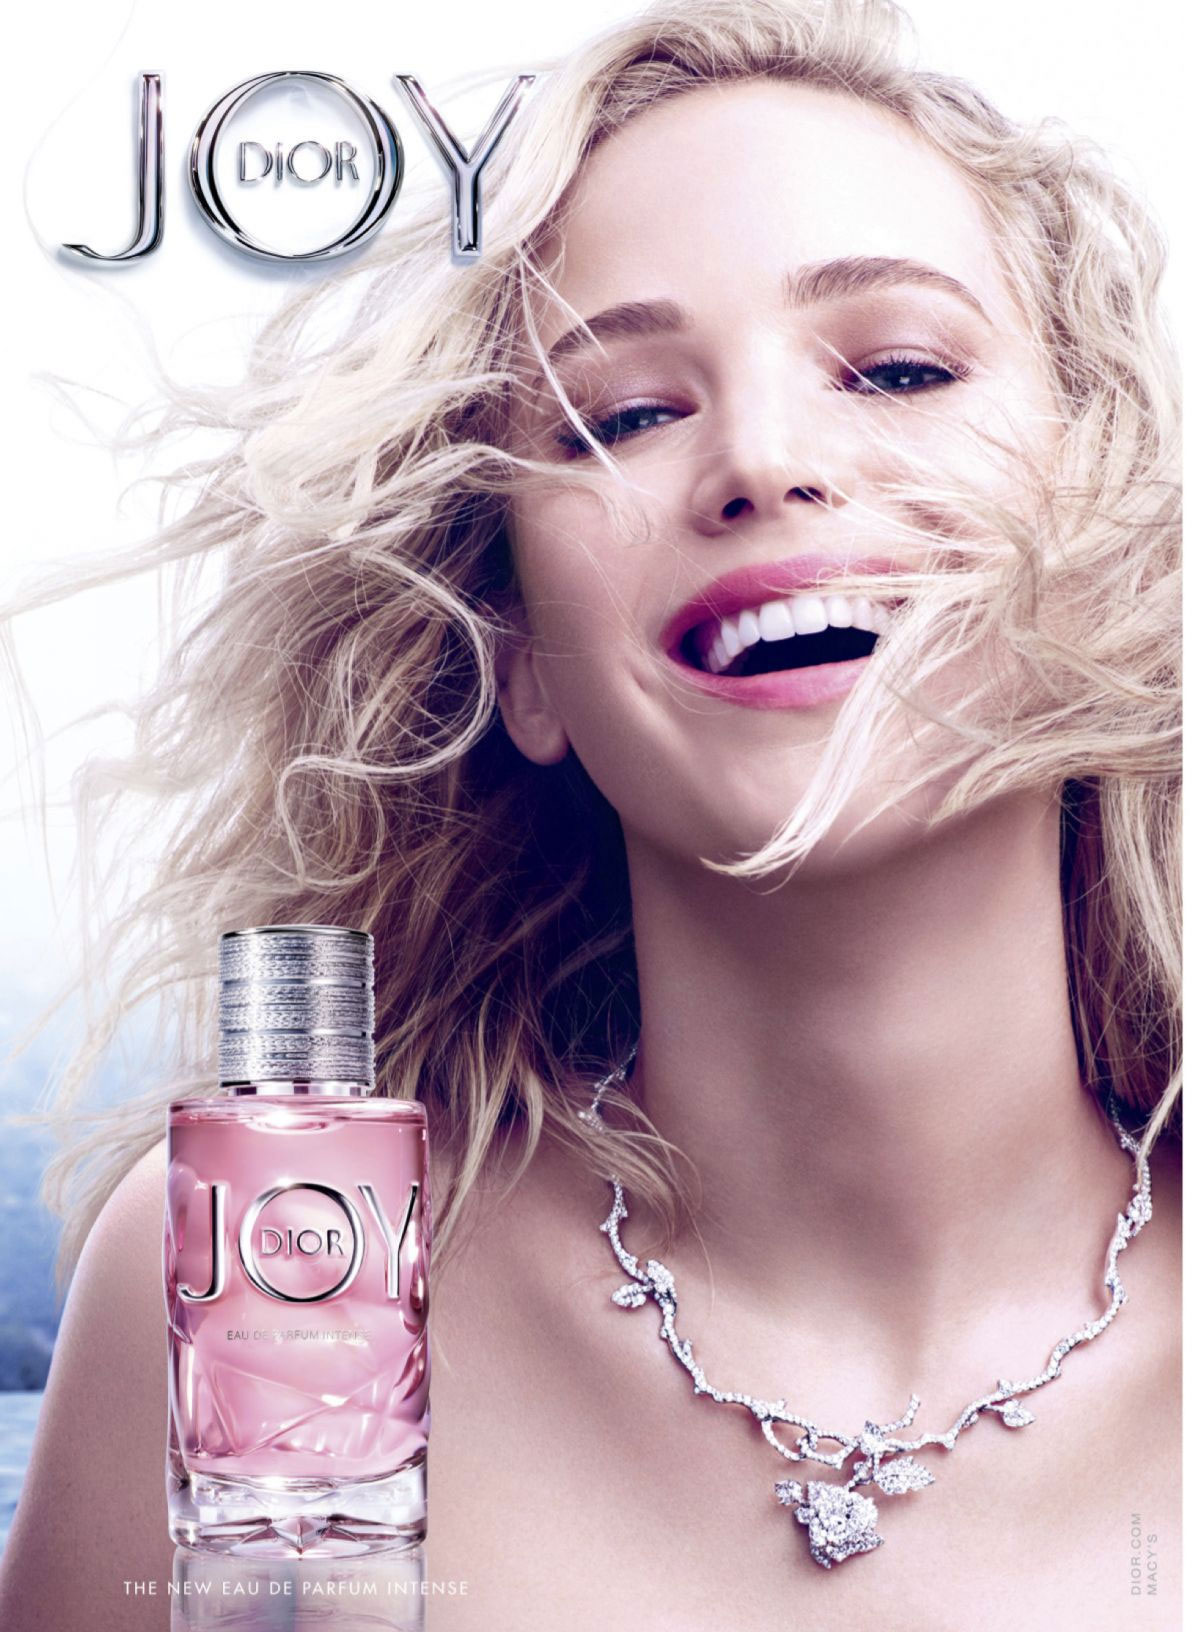 Dior Joy Intense Fragrances - Perfumes, Colognes, Parfums, Scents ...